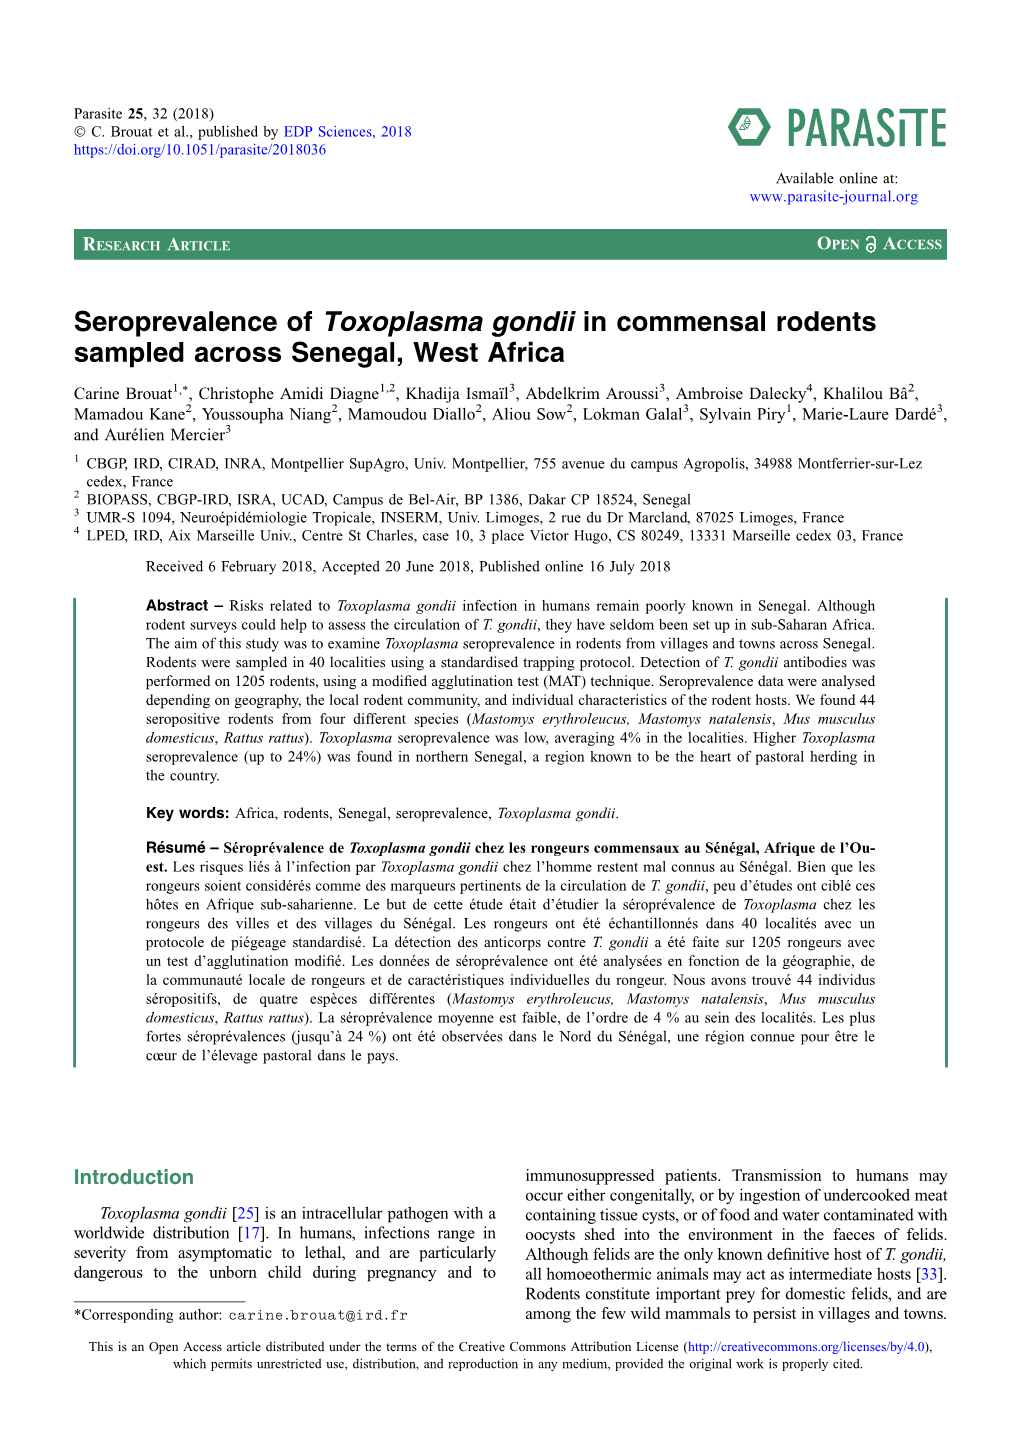 Seroprevalence of Toxoplasma Gondii in Commensal Rodents Sampled Across Senegal, West Africa